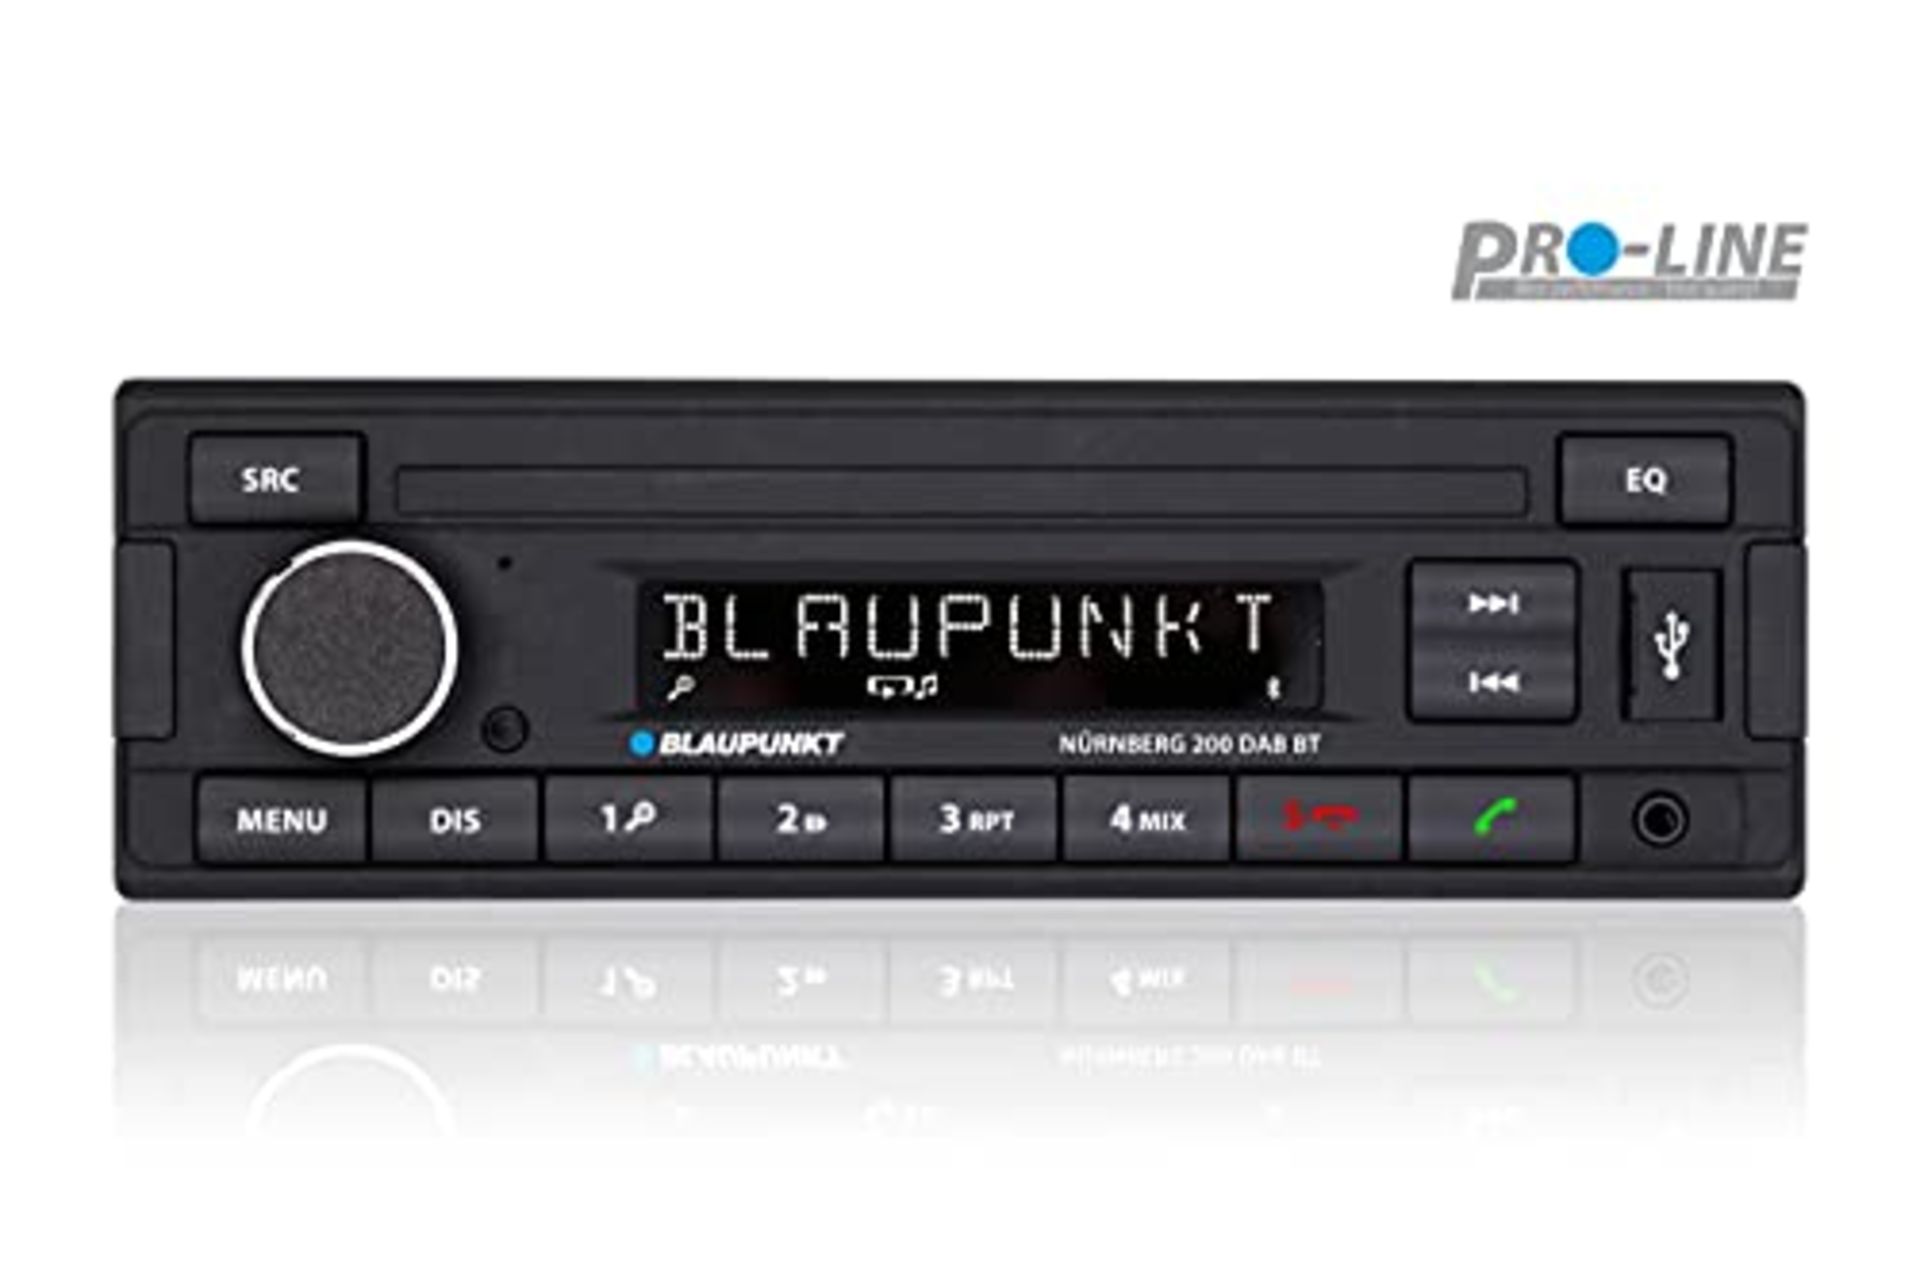 RRP £109.00 Blaupunkt Nürnberg 200 DAB BT car radio with Bluetooth hands-free system, DAB+ tuner.